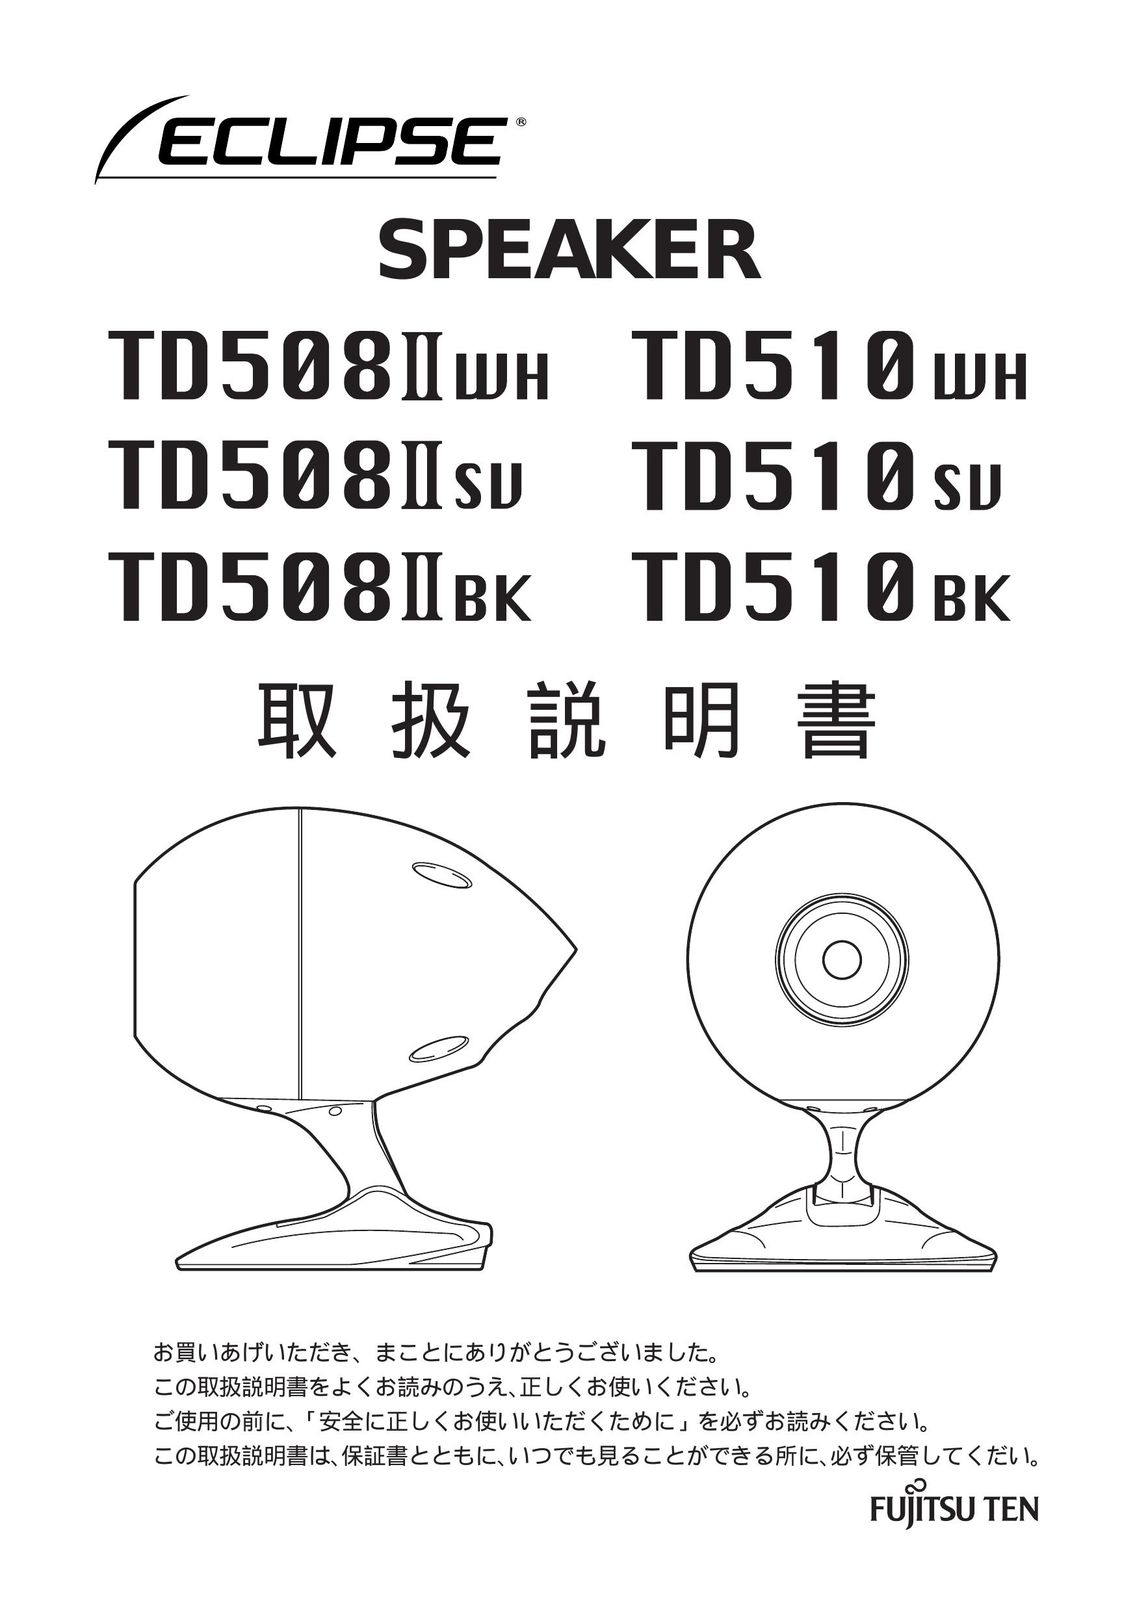 Eclipse - Fujitsu Ten TD510 SV Car Speaker User Manual